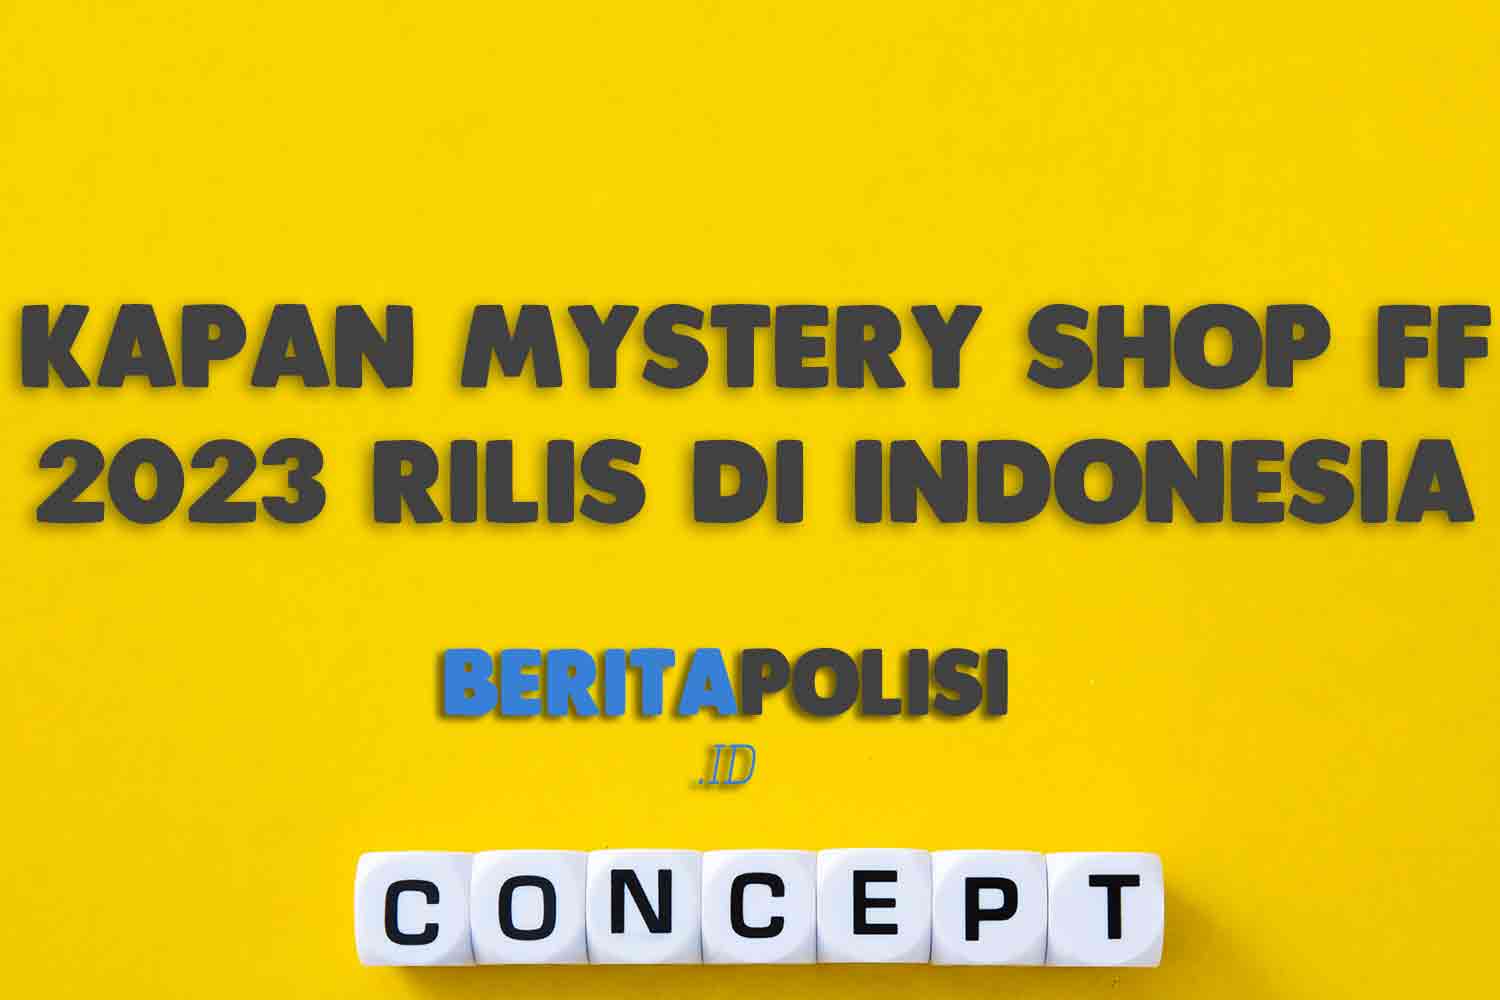 Kapan Mystery Shop Ff 2023 Rilis Di Indonesia